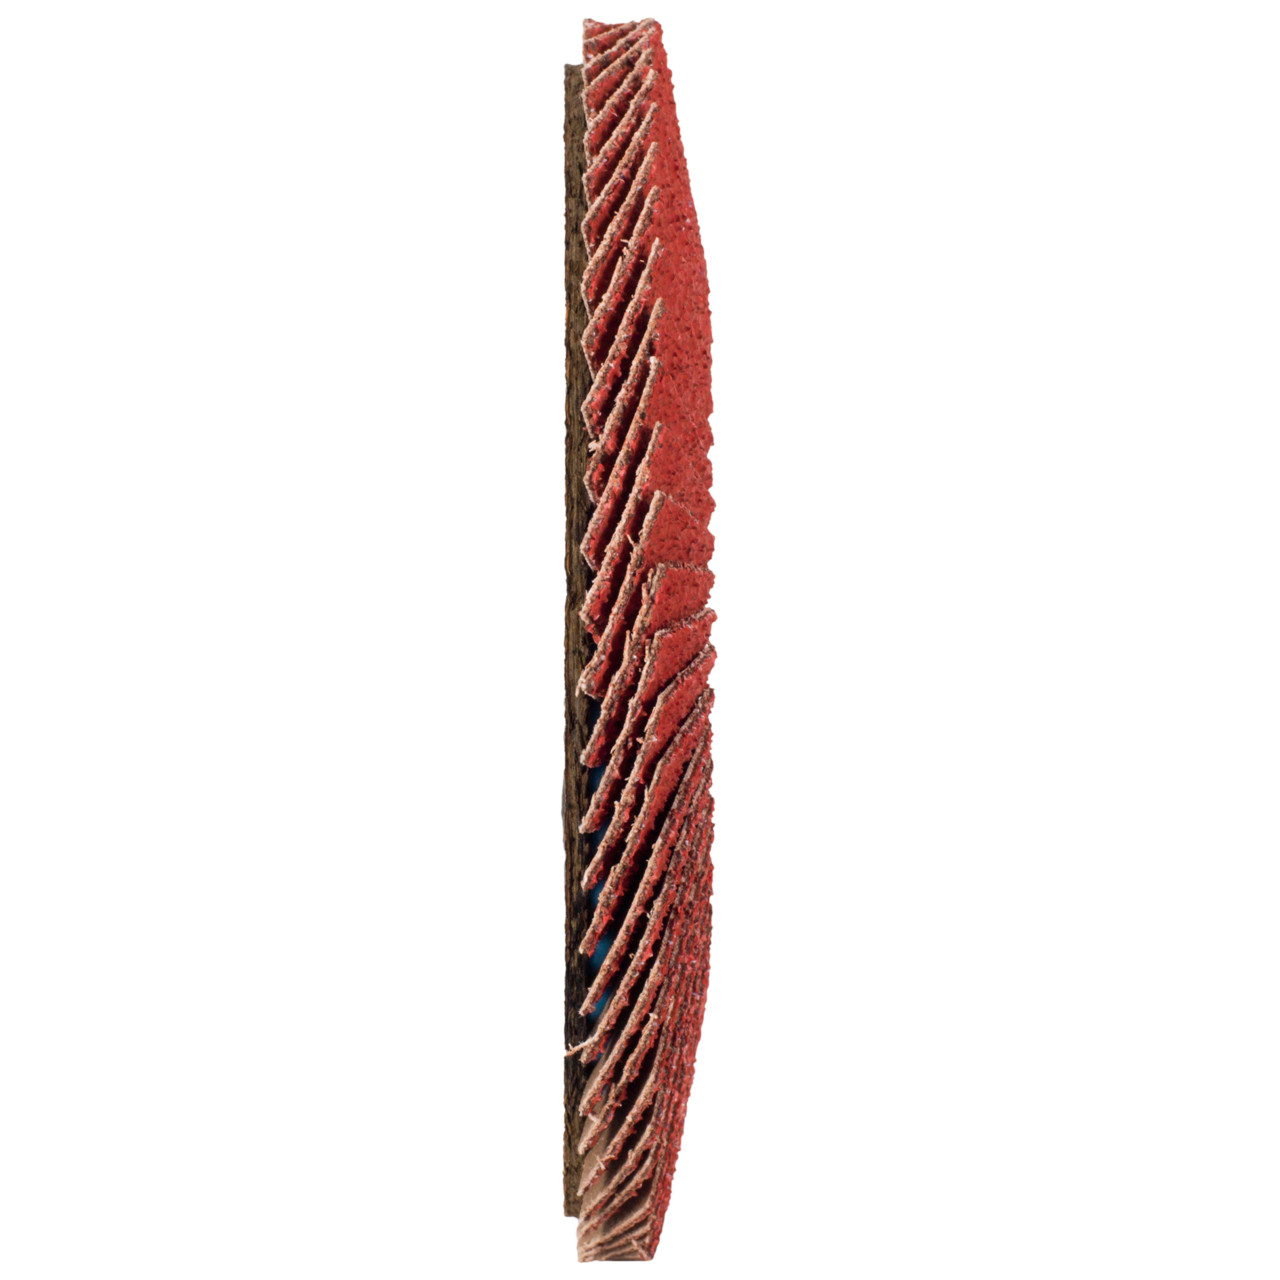 Tyrolit Gekartelde borgring DxH 125x22,23 CERABOND gekartelde borgring voor roestvrij staal, P40, vorm: 27A - offset uitvoering (glasvezeldrager body versie), Art. 34043516